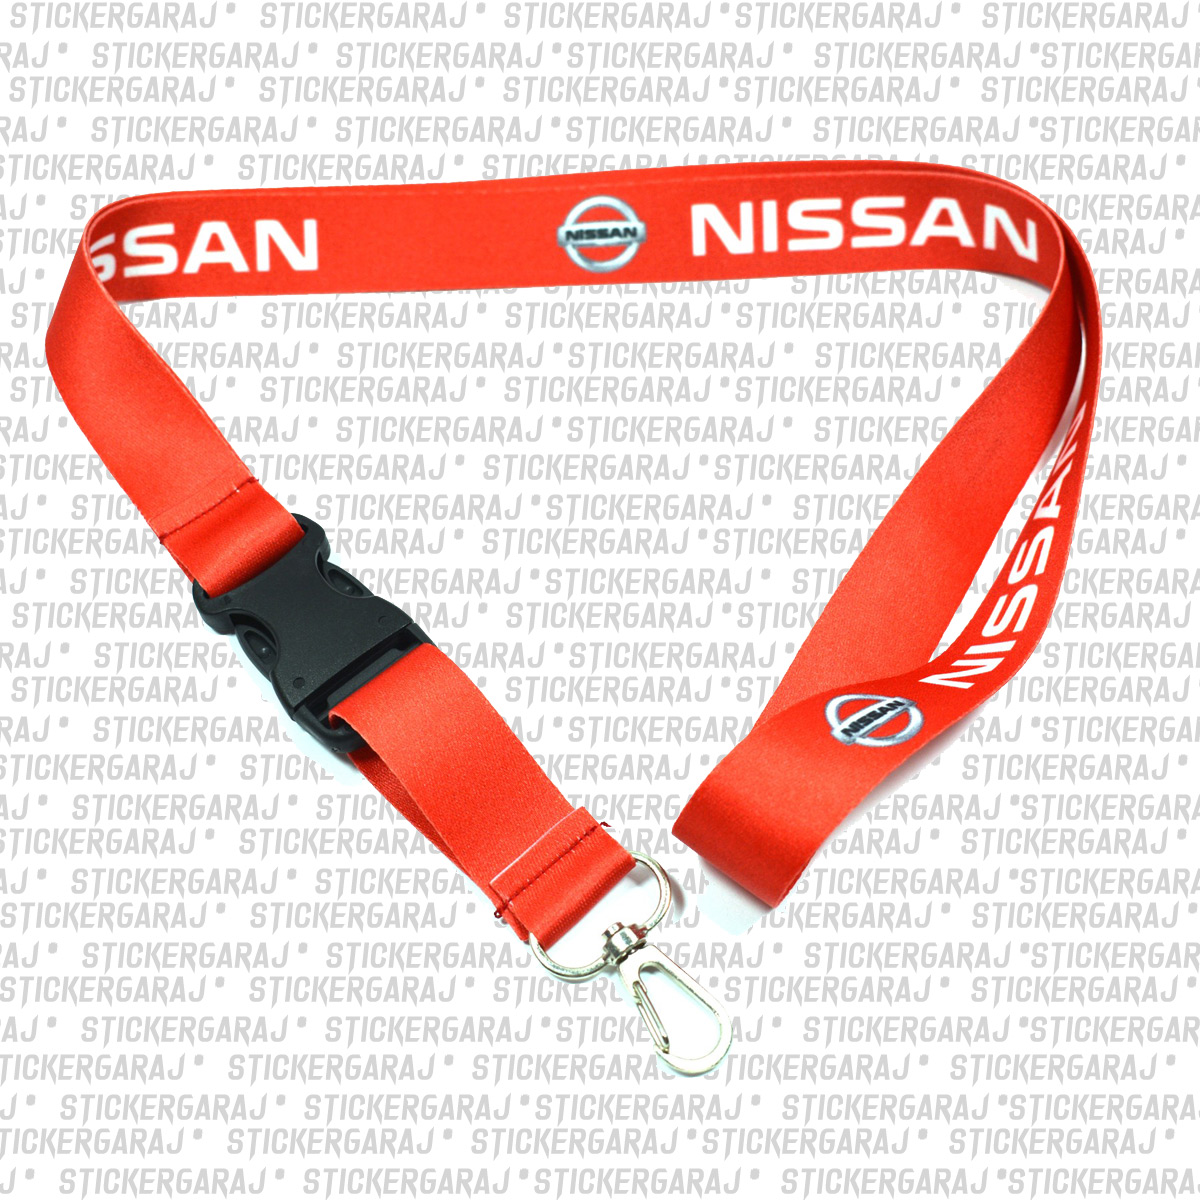 nissan anahtarlik - Nissan ayna boyun ipi - Baskılı